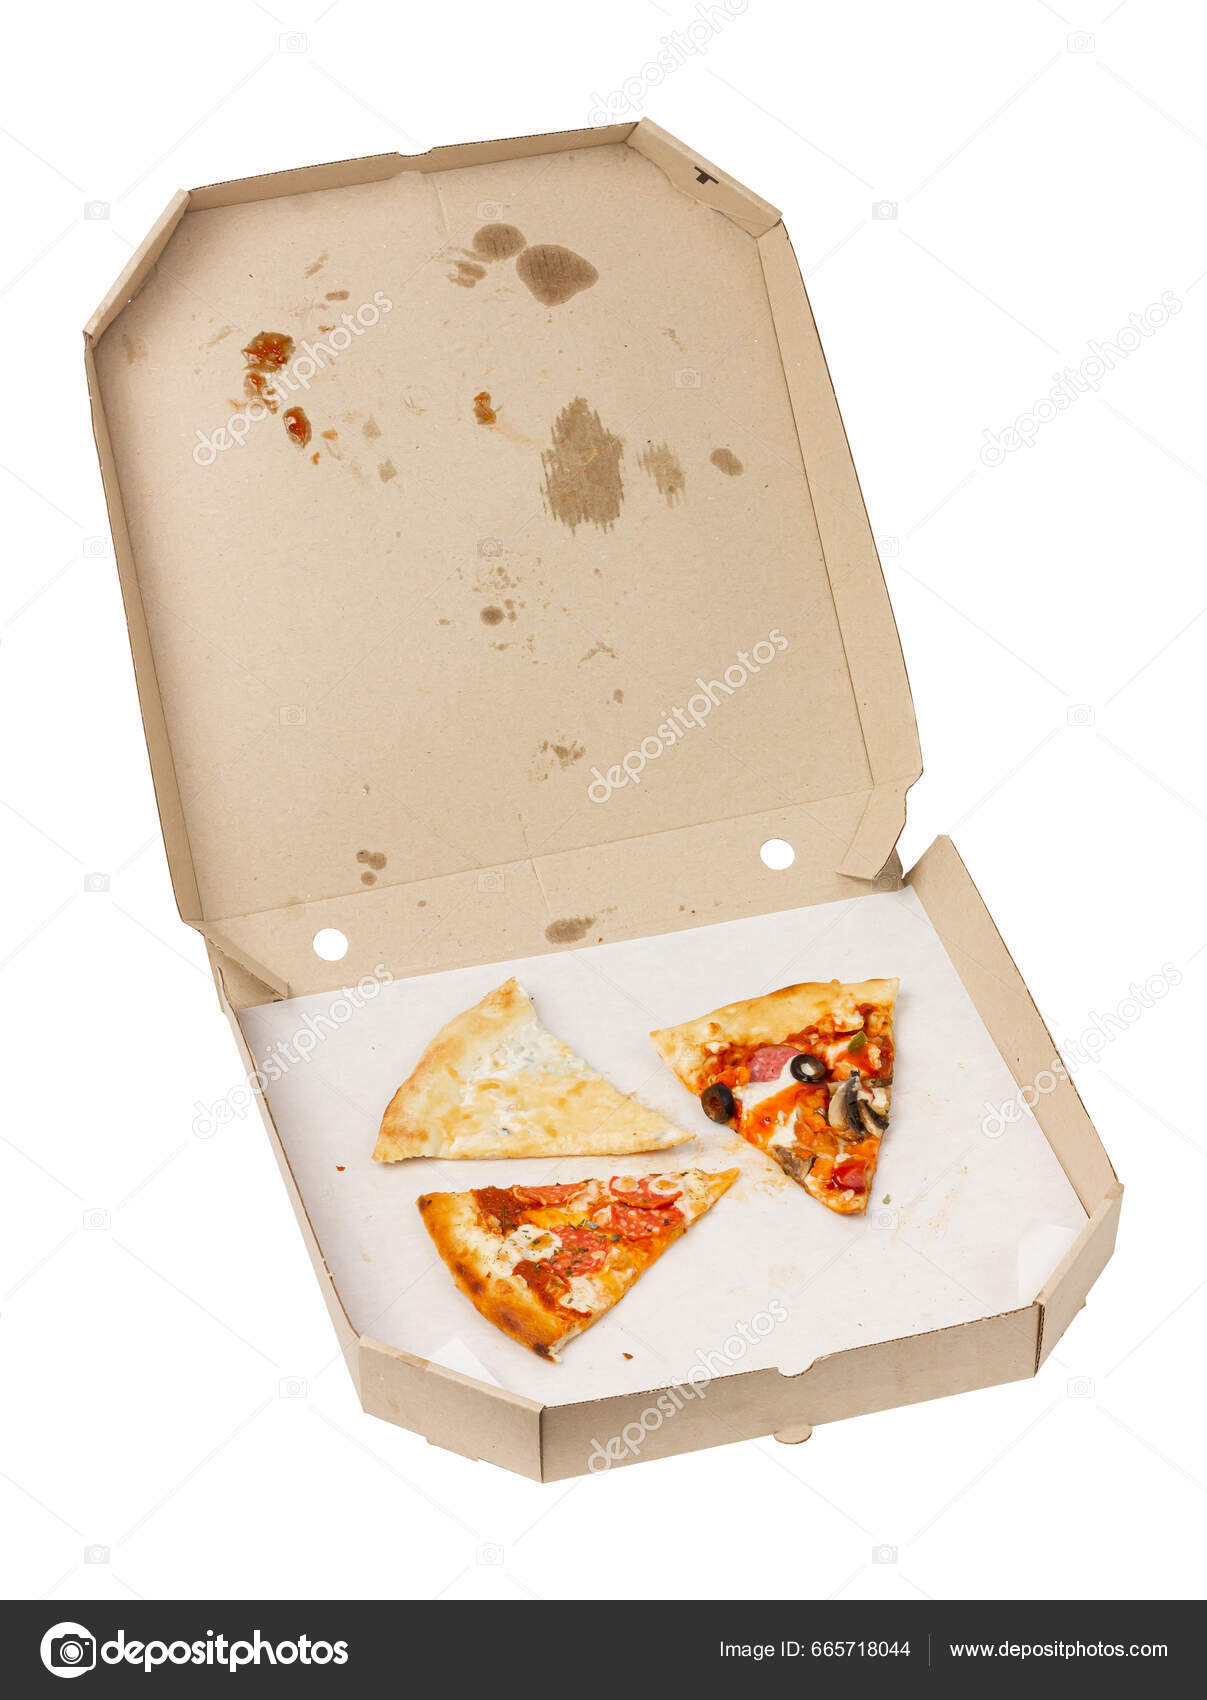 https://st5.depositphotos.com/40644478/66571/i/1600/depositphotos_665718044-stock-photo-leftover-pizza-cardboard-box-pizza.jpg